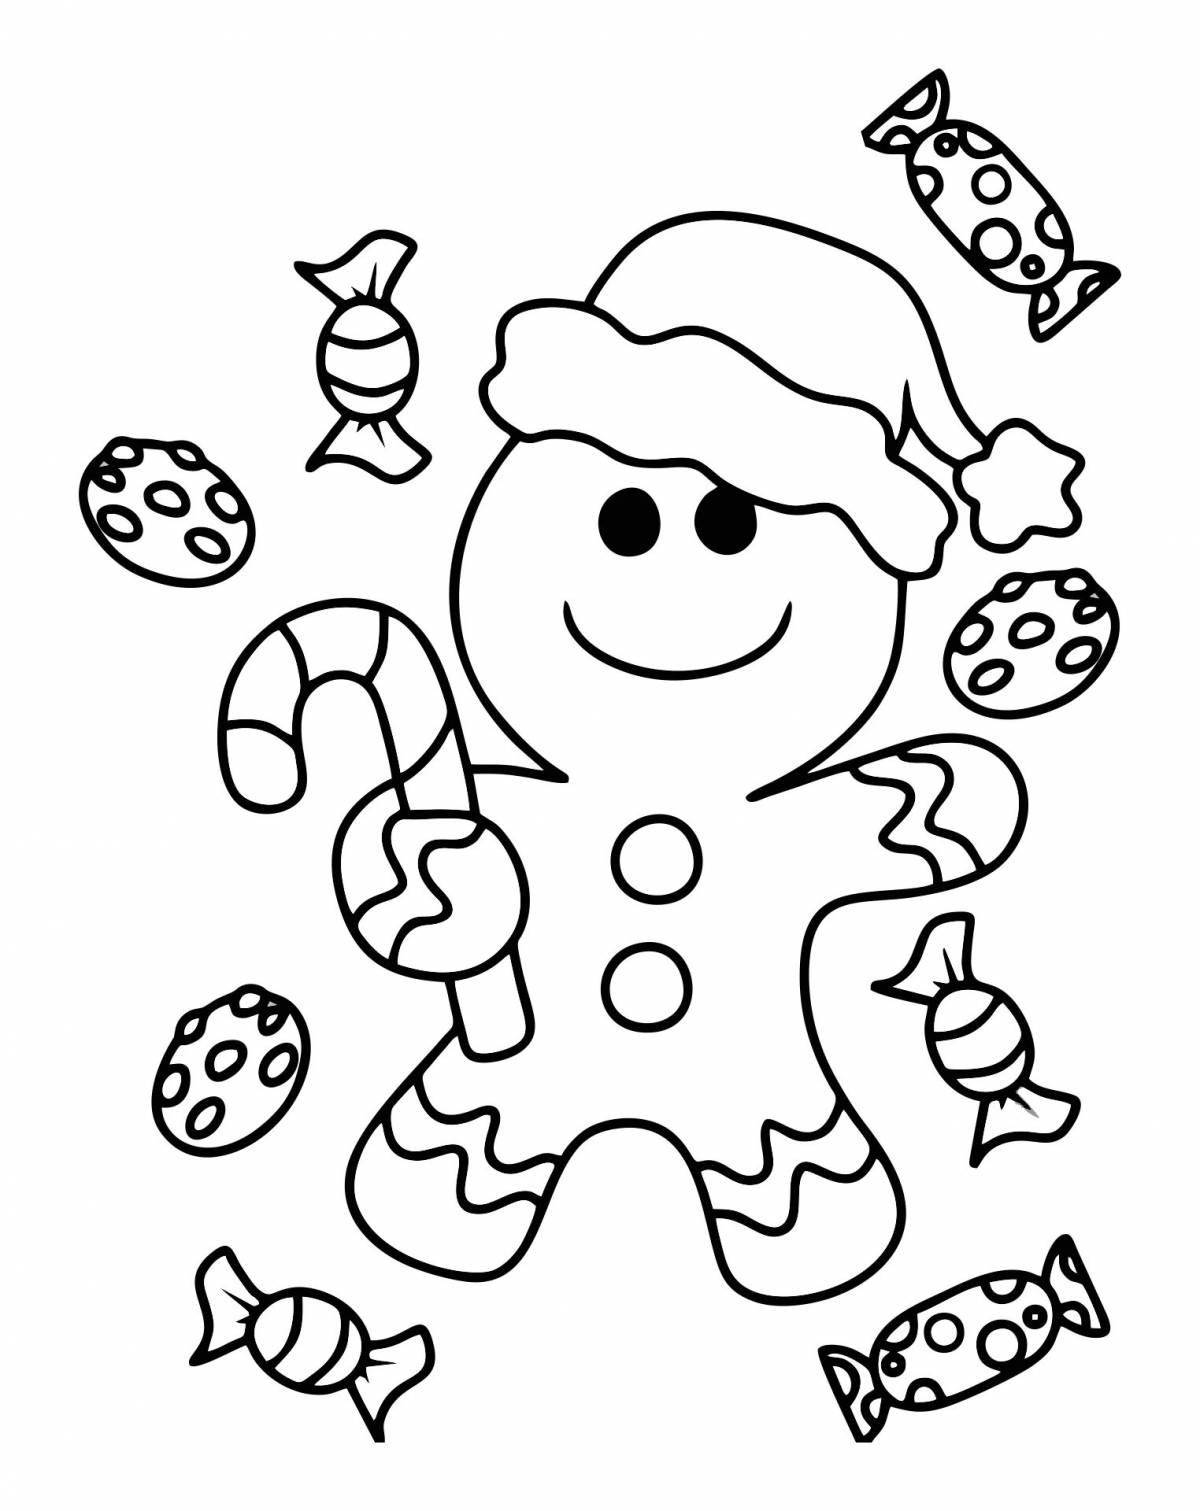 Magic gingerbread man coloring page